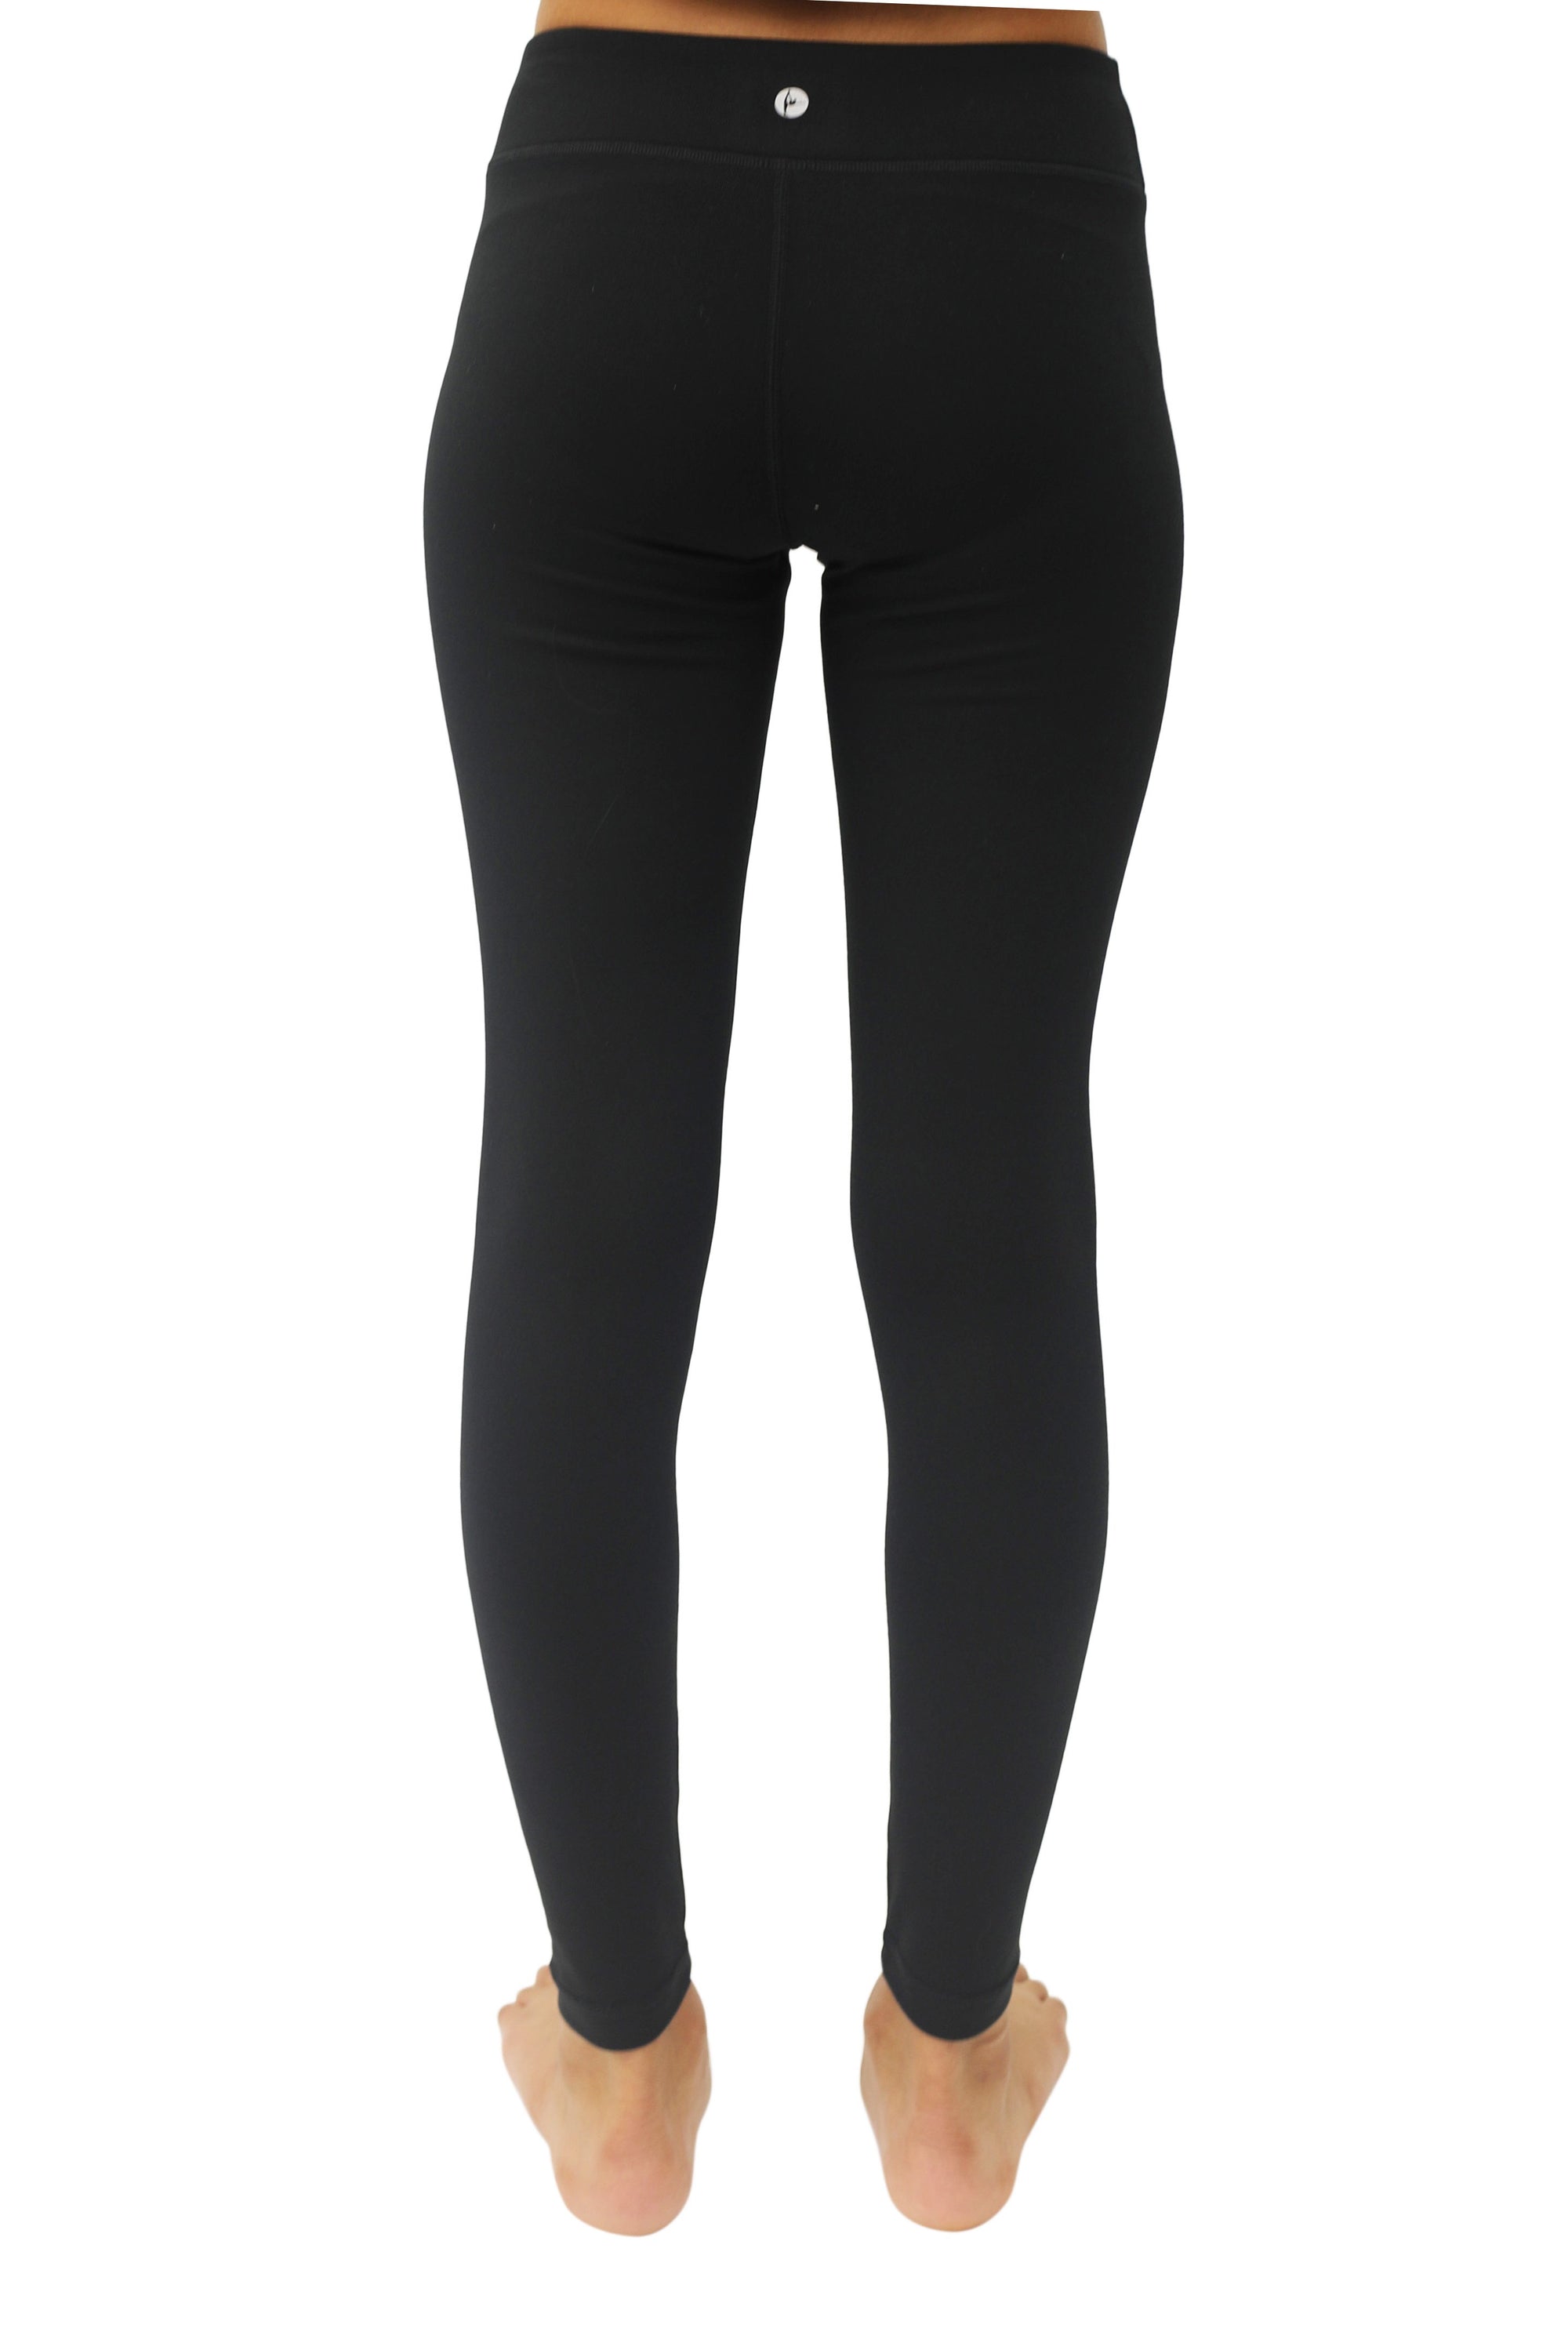 90 Degree by Reflex Women's Capri Length Leggings Size S - $28